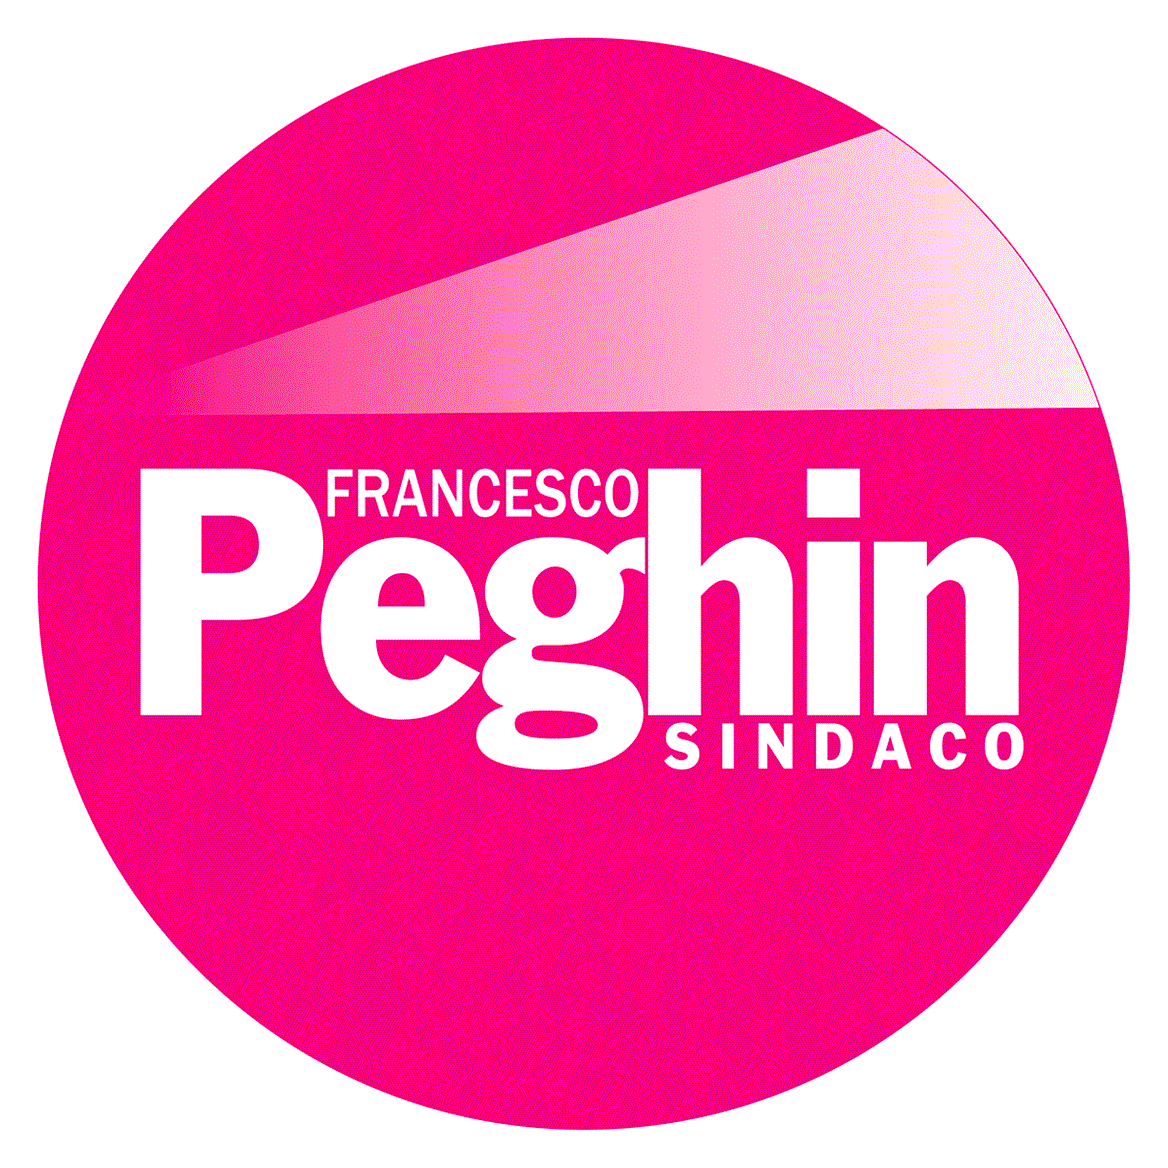 FRANCESCO PEGHIN SINDACO